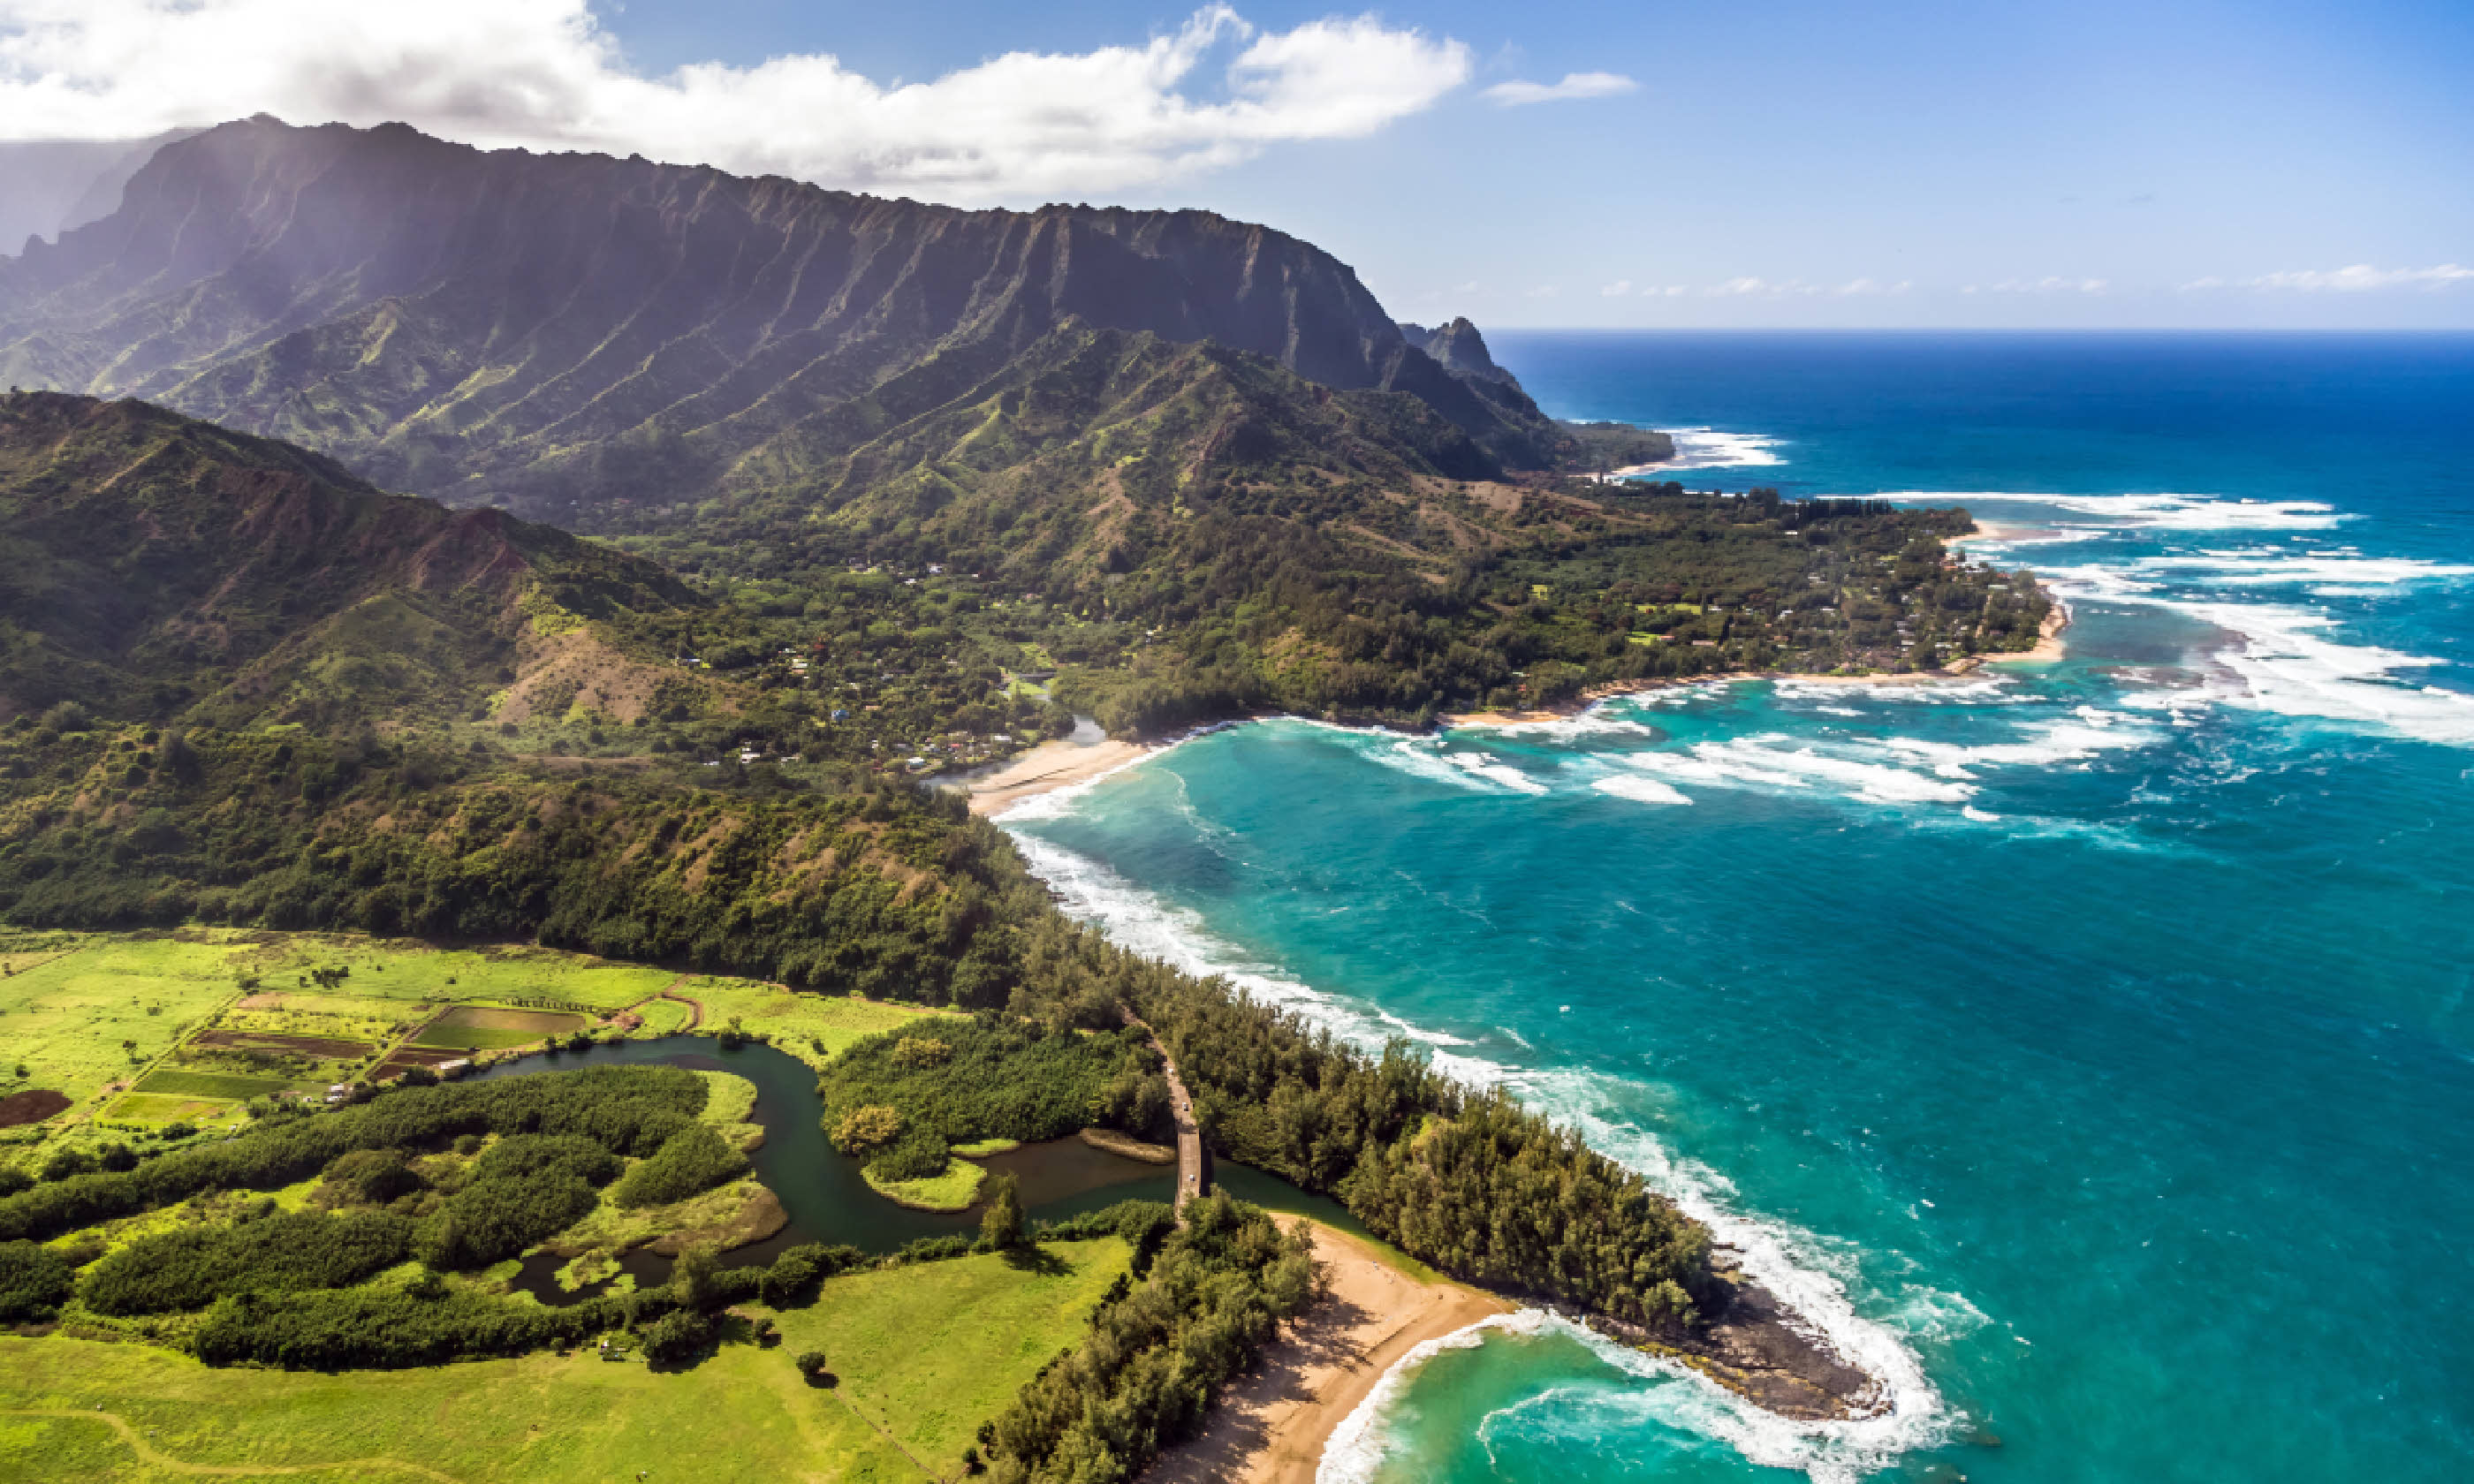 Kauai, Hawaii (Shutterstock: see credit below)